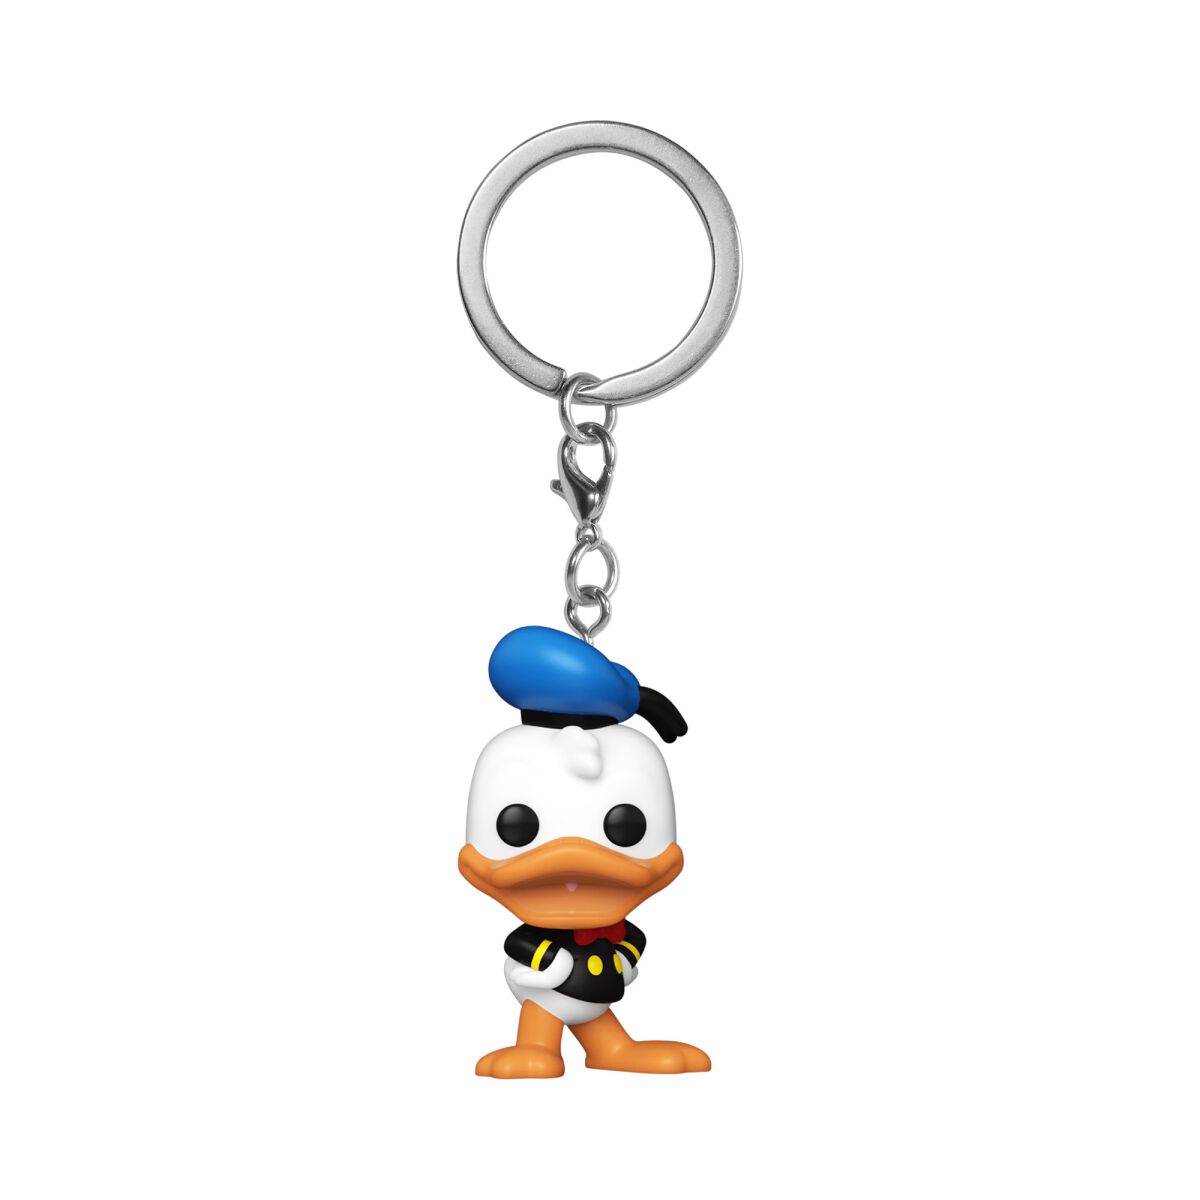 Micky Maus 90th Anniversary - 1938 Donald Duck Pocket Pop! Funko Pocket Pop! multicolor